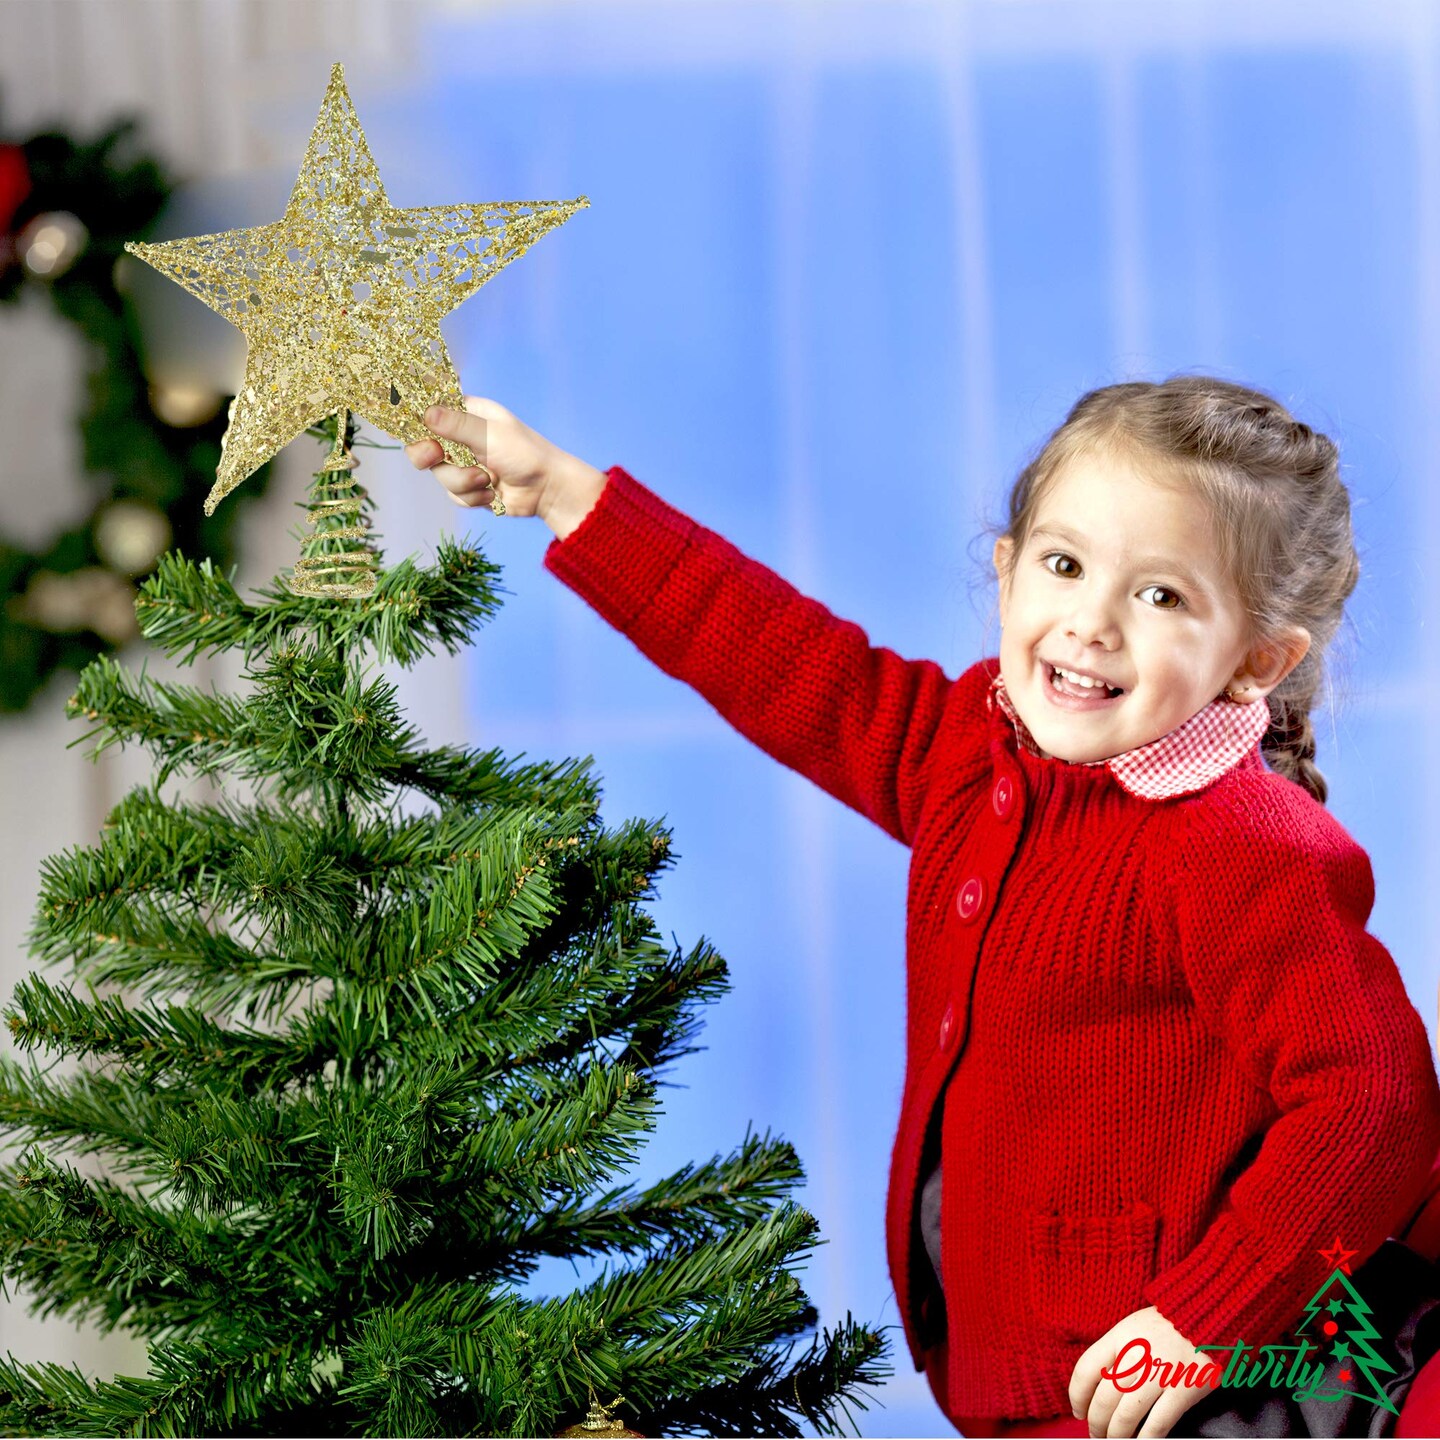 Ornativity Gold Star Tree Topper - Christmas Glitter Star Ornament Treetop Decoration